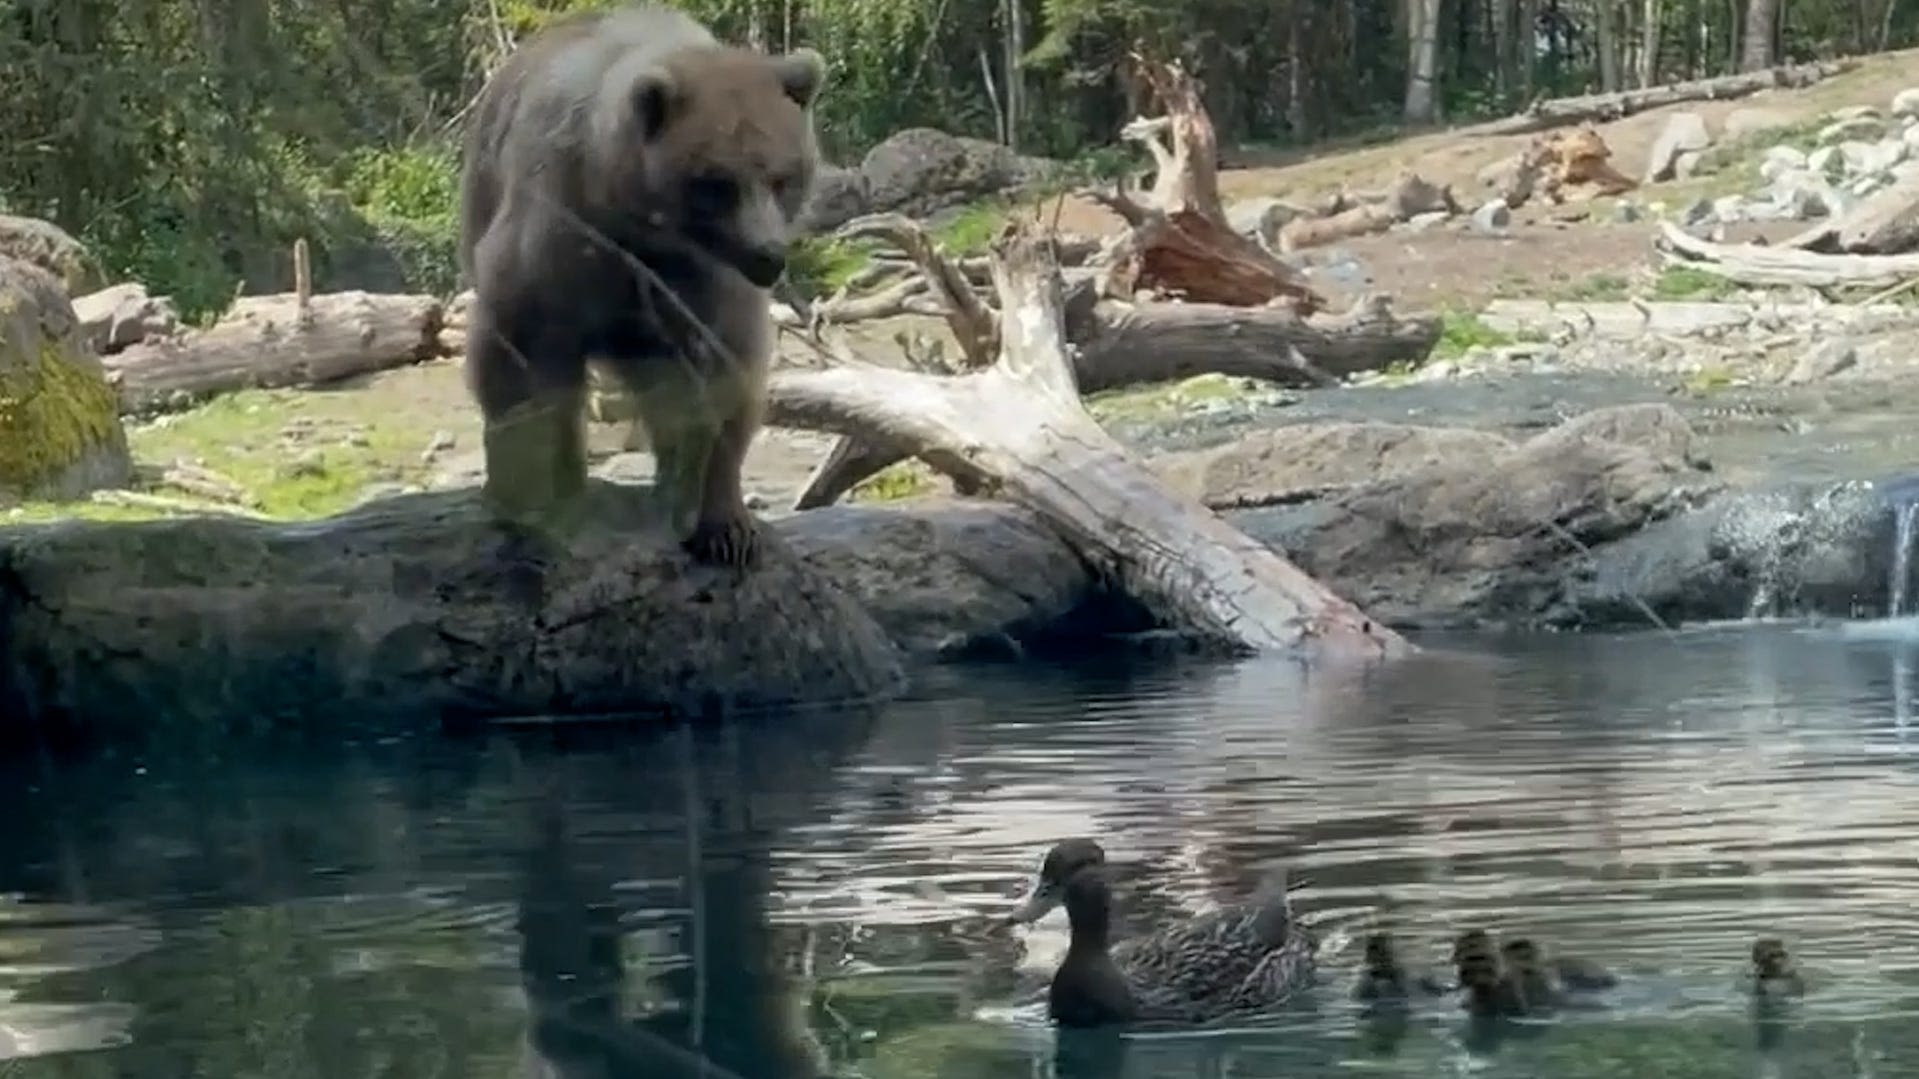 Children watch in shock as bear eats ducklings in zoo enclosure